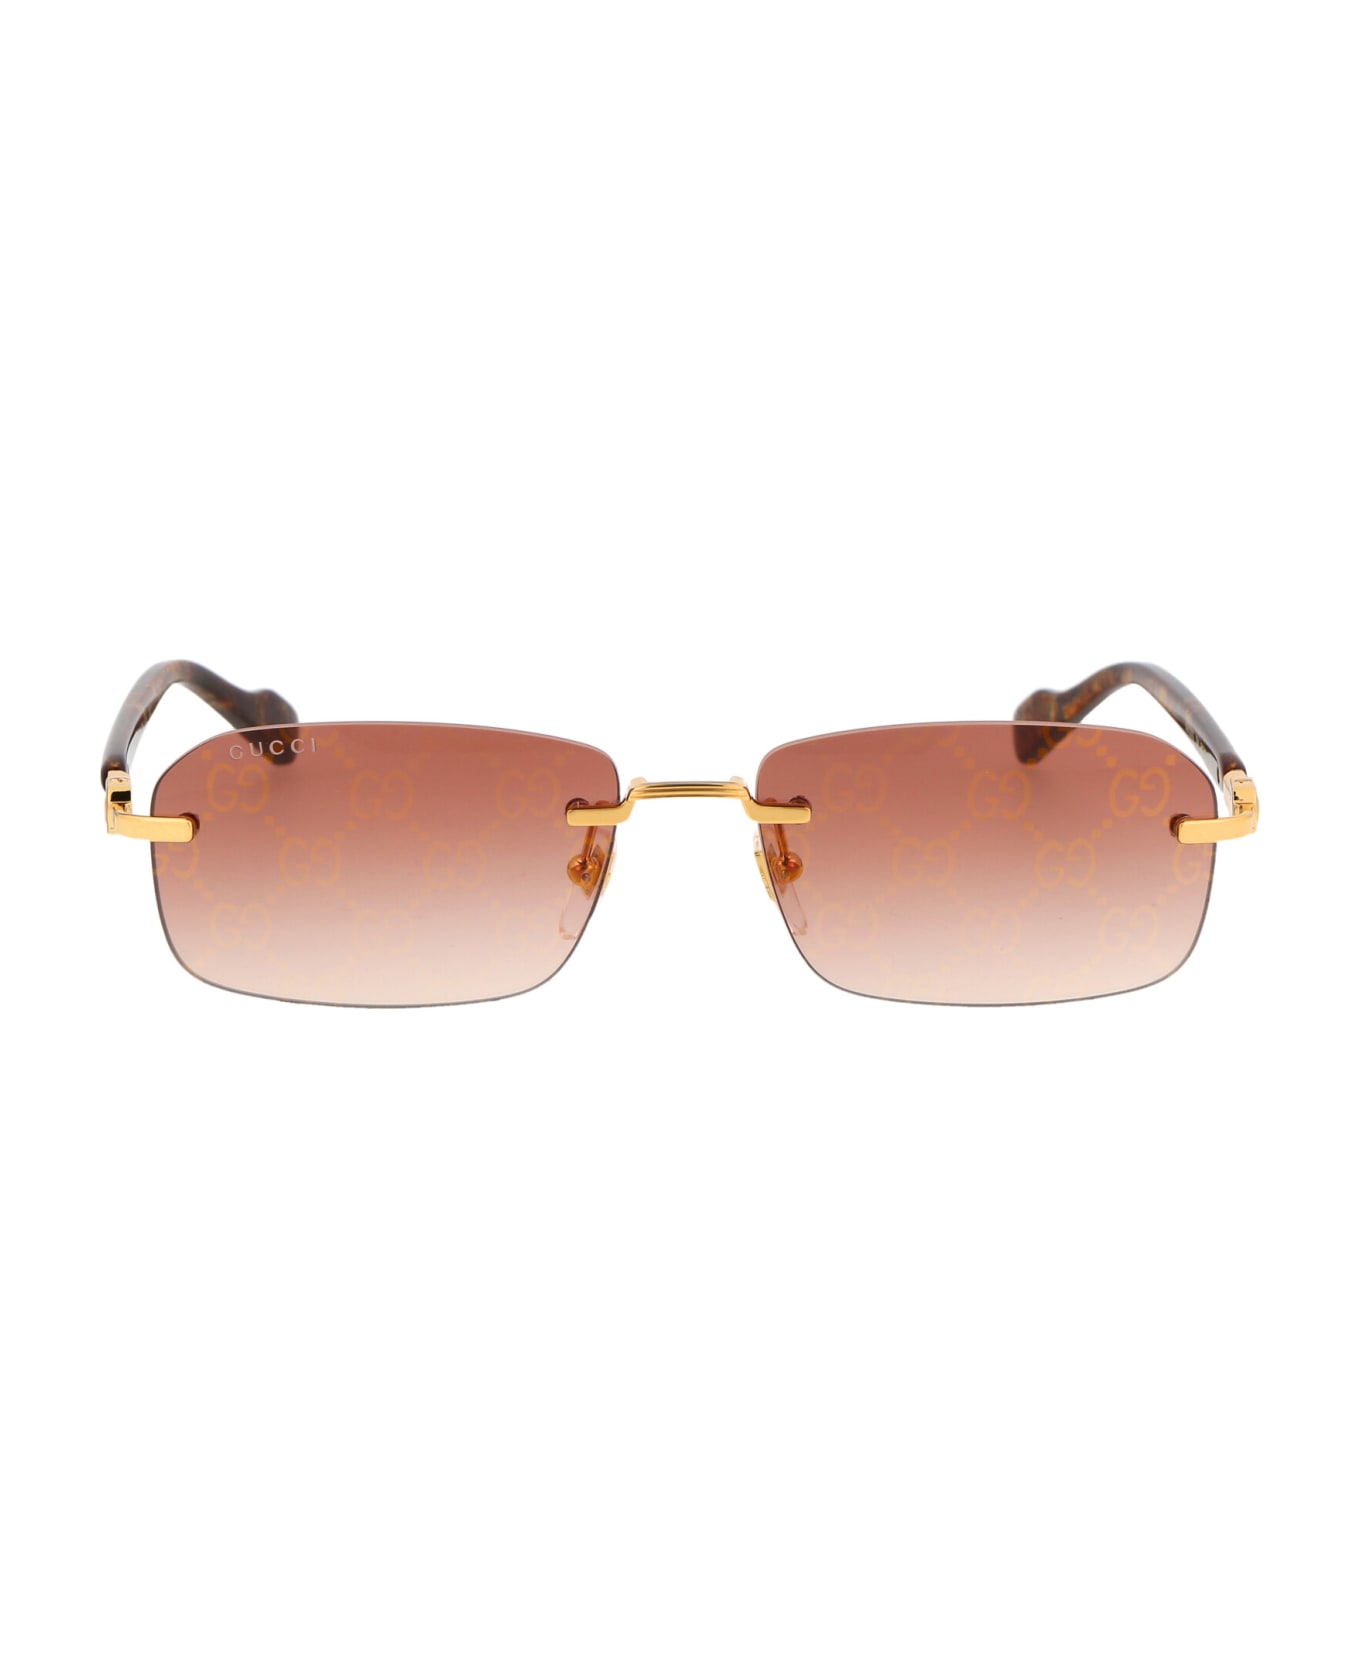 Gucci Eyewear Gg1221s Sunglasses - 004 GOLD YELLOW RED